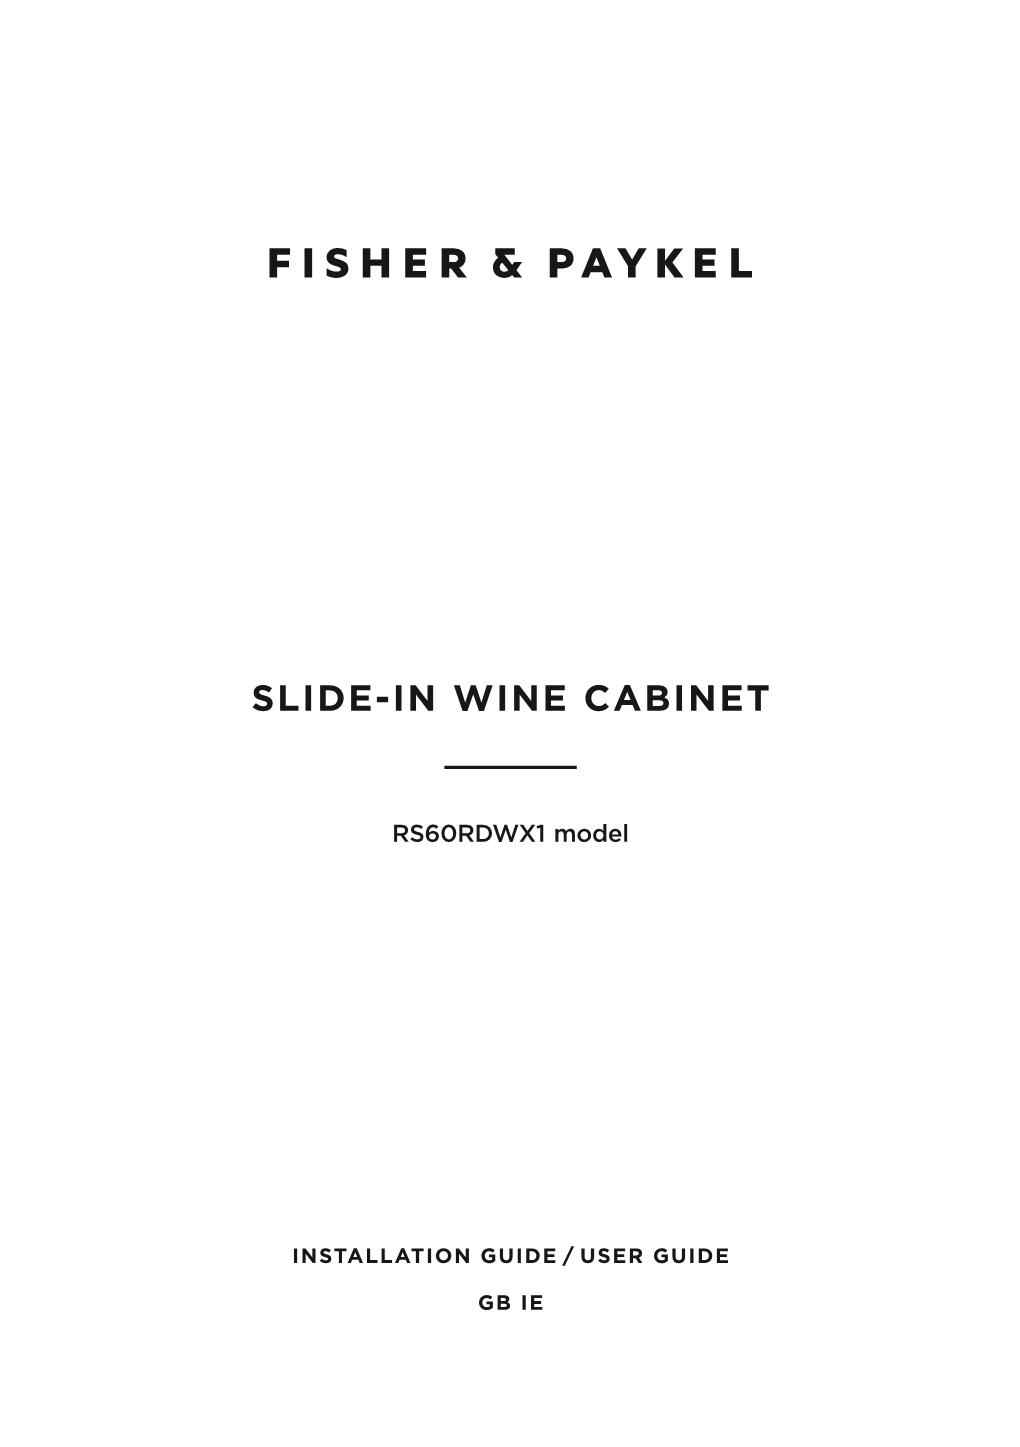 Slide-In Wine Cabinet